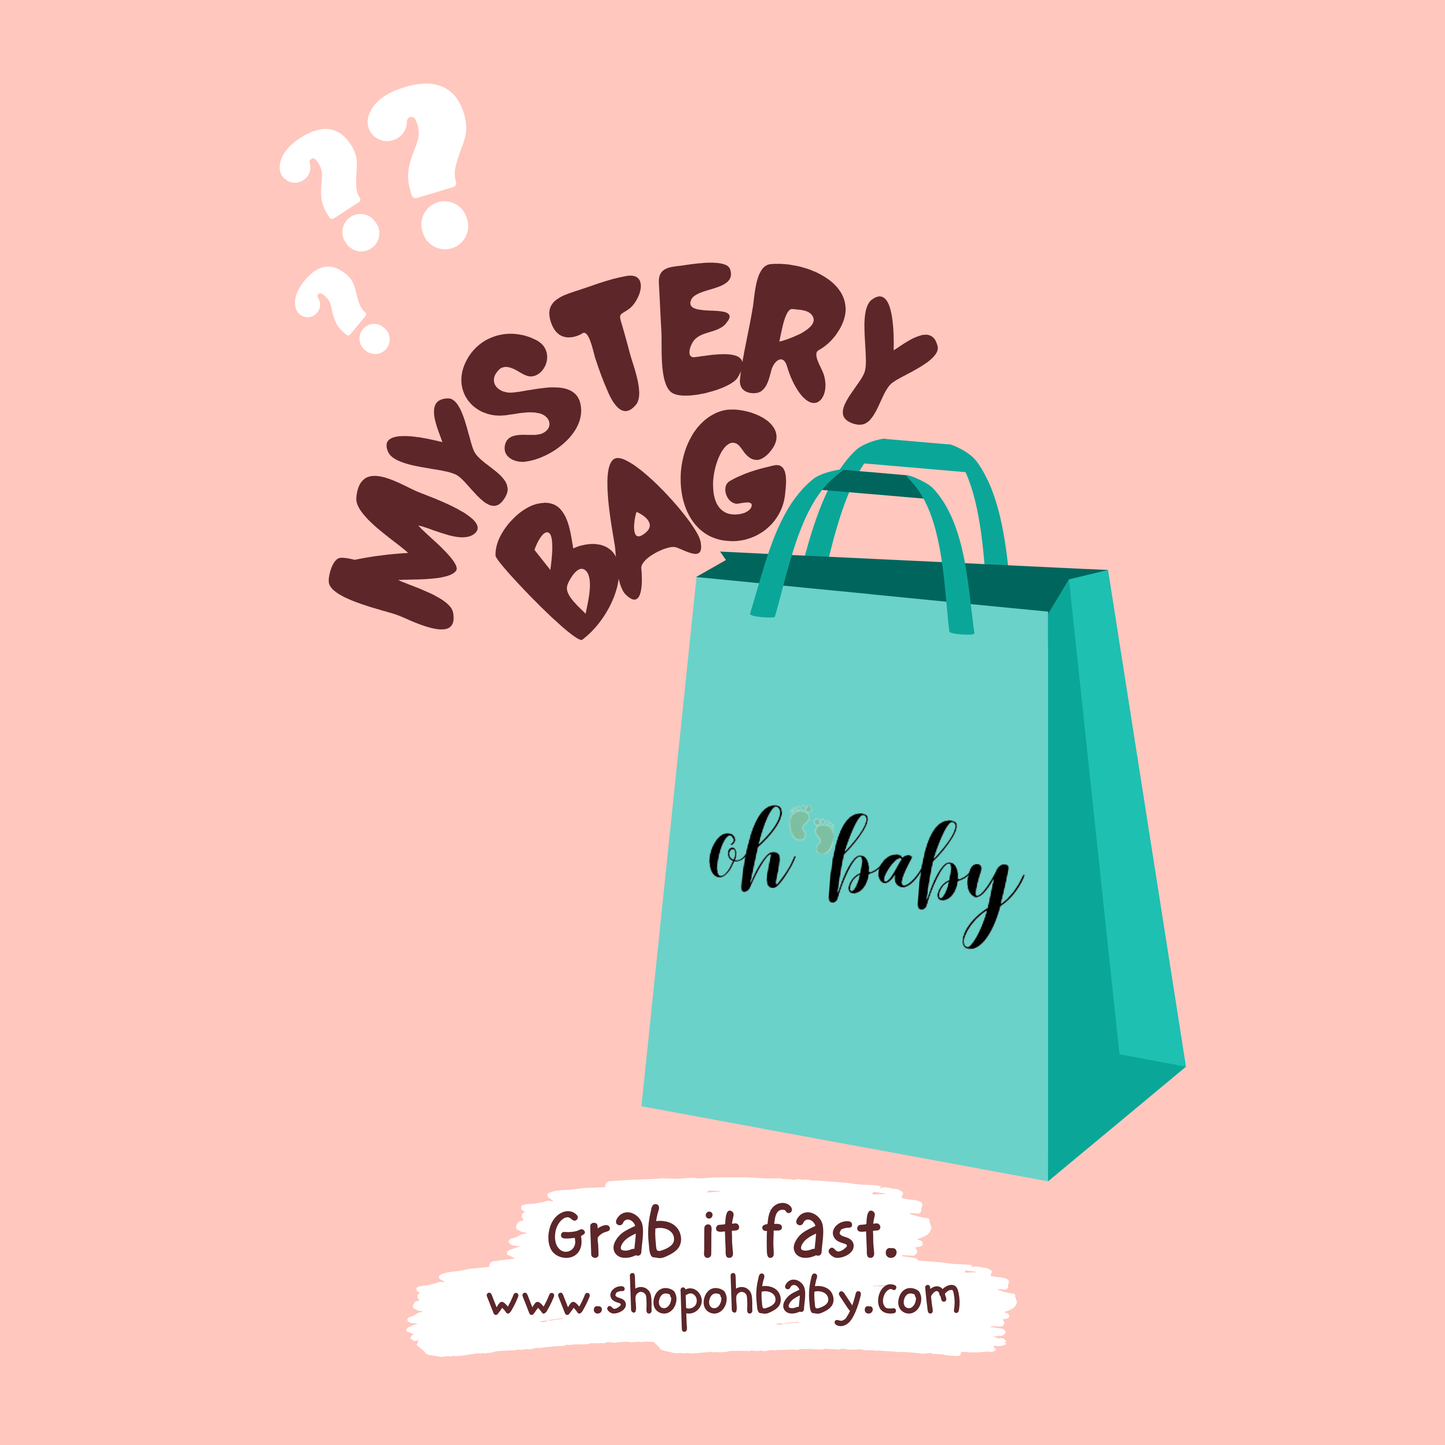 $50 Mystery Grab Bag